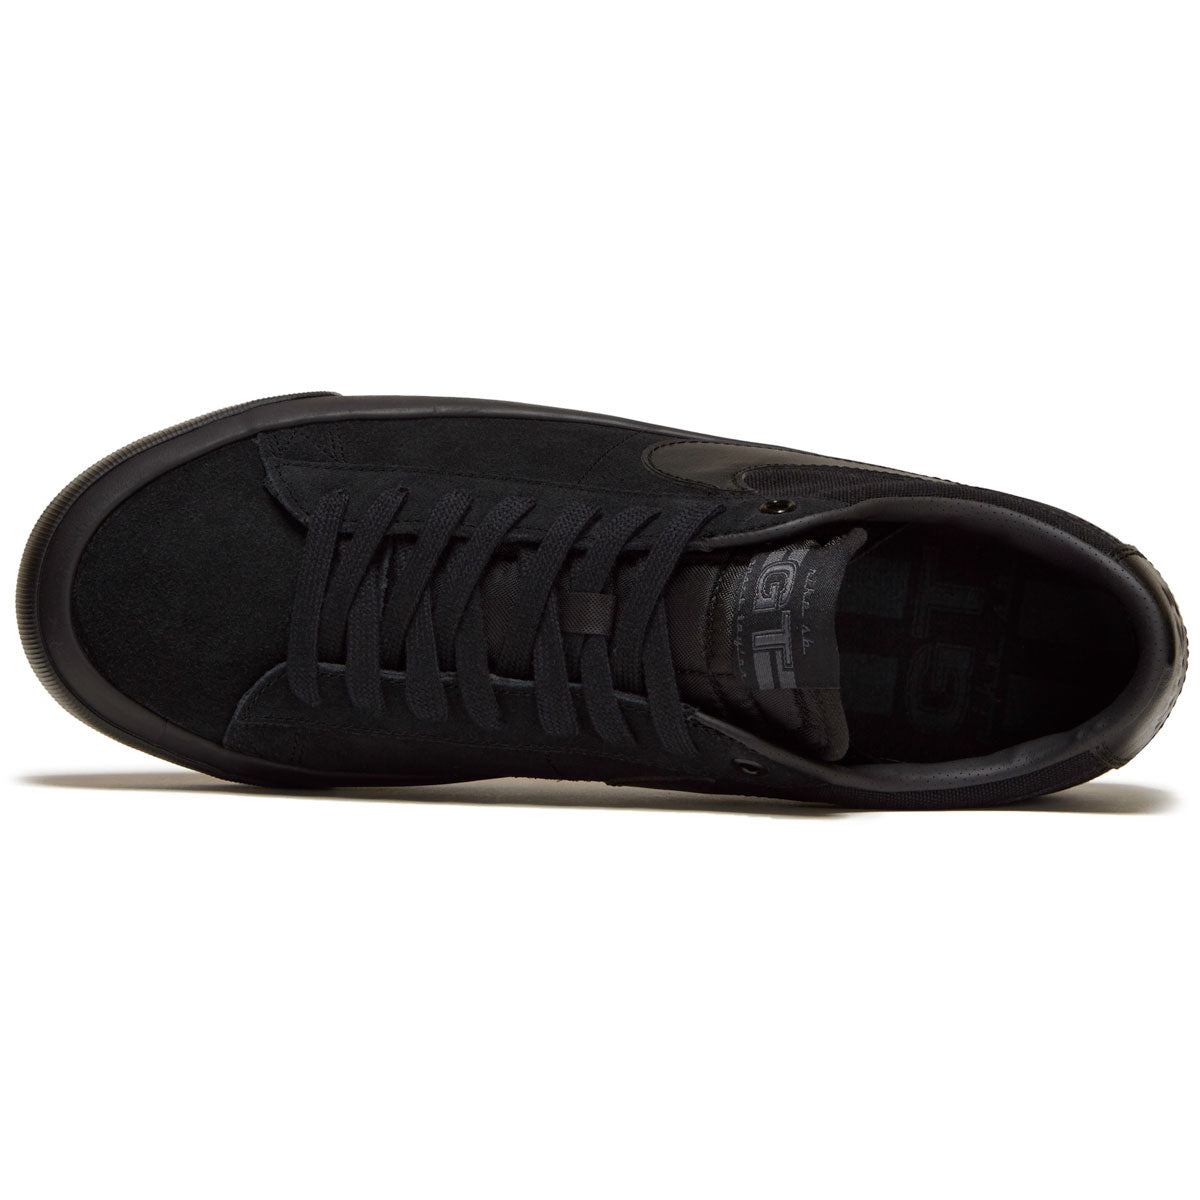 Nike SB Zoom Blazer Low Pro GT Shoes - Black/Black/Black/Anthracite image 3